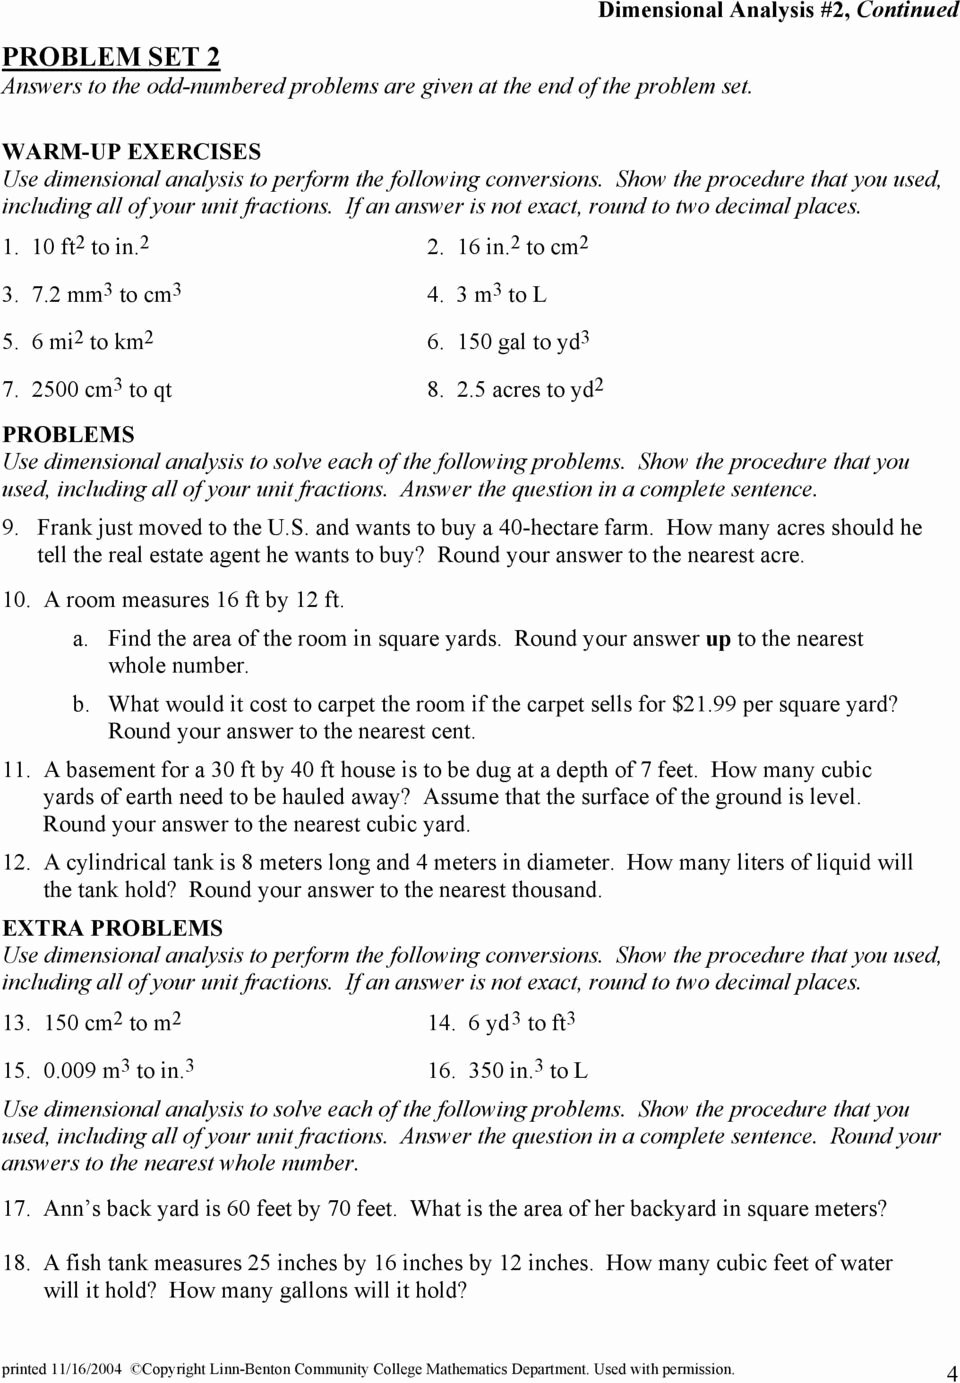 Dimensional Analysis Worksheet 2 Fresh Algebra 1 Unit Conversion Worksheet Answers